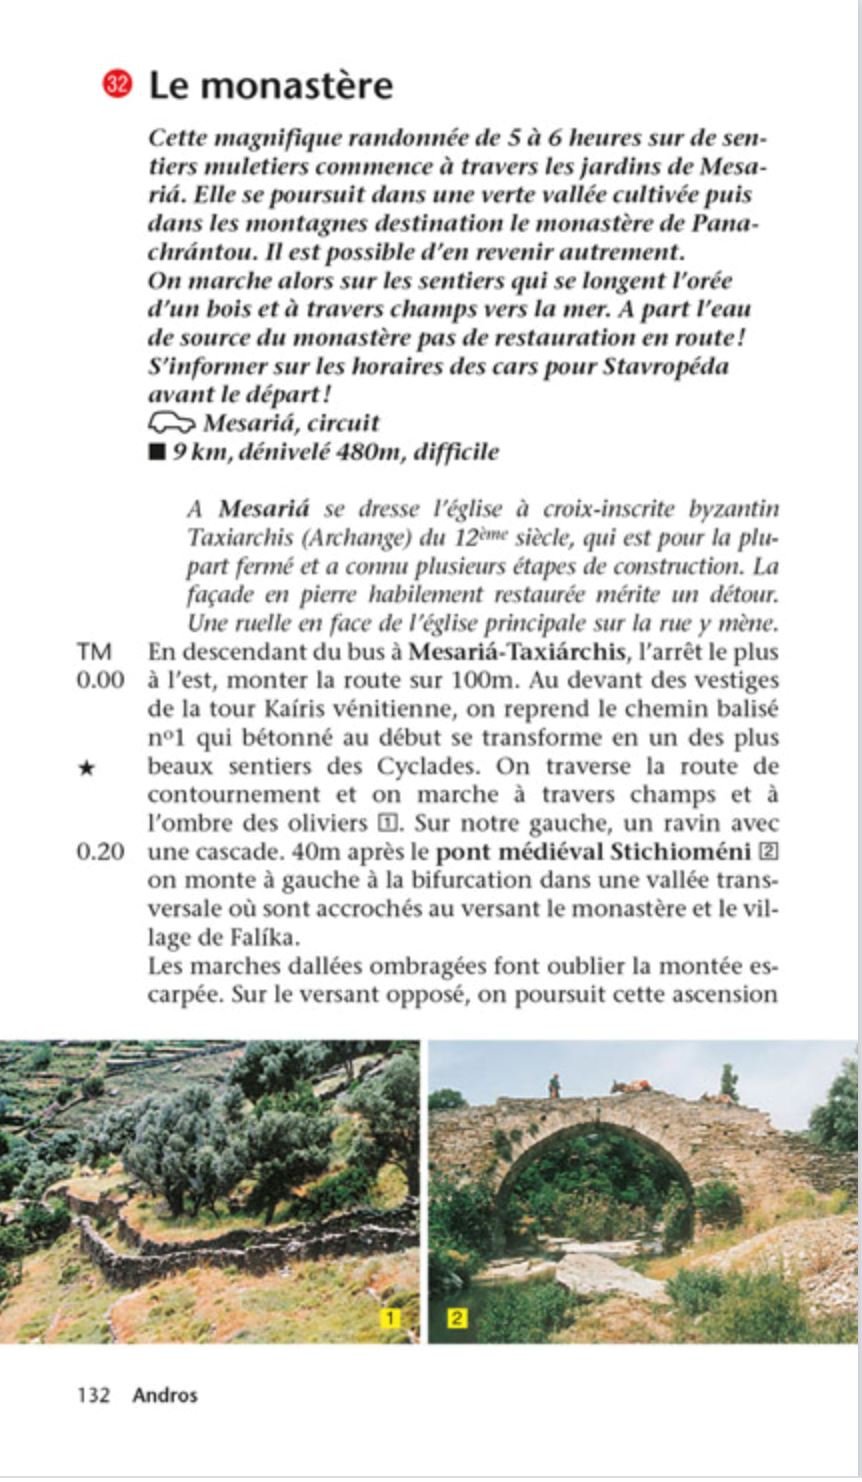 Guide de randonnées - Amorgos, Naxos, Paros, Andros, Est & Nord des Cyclades | Graf Editions guide de randonnée Graf Editions 